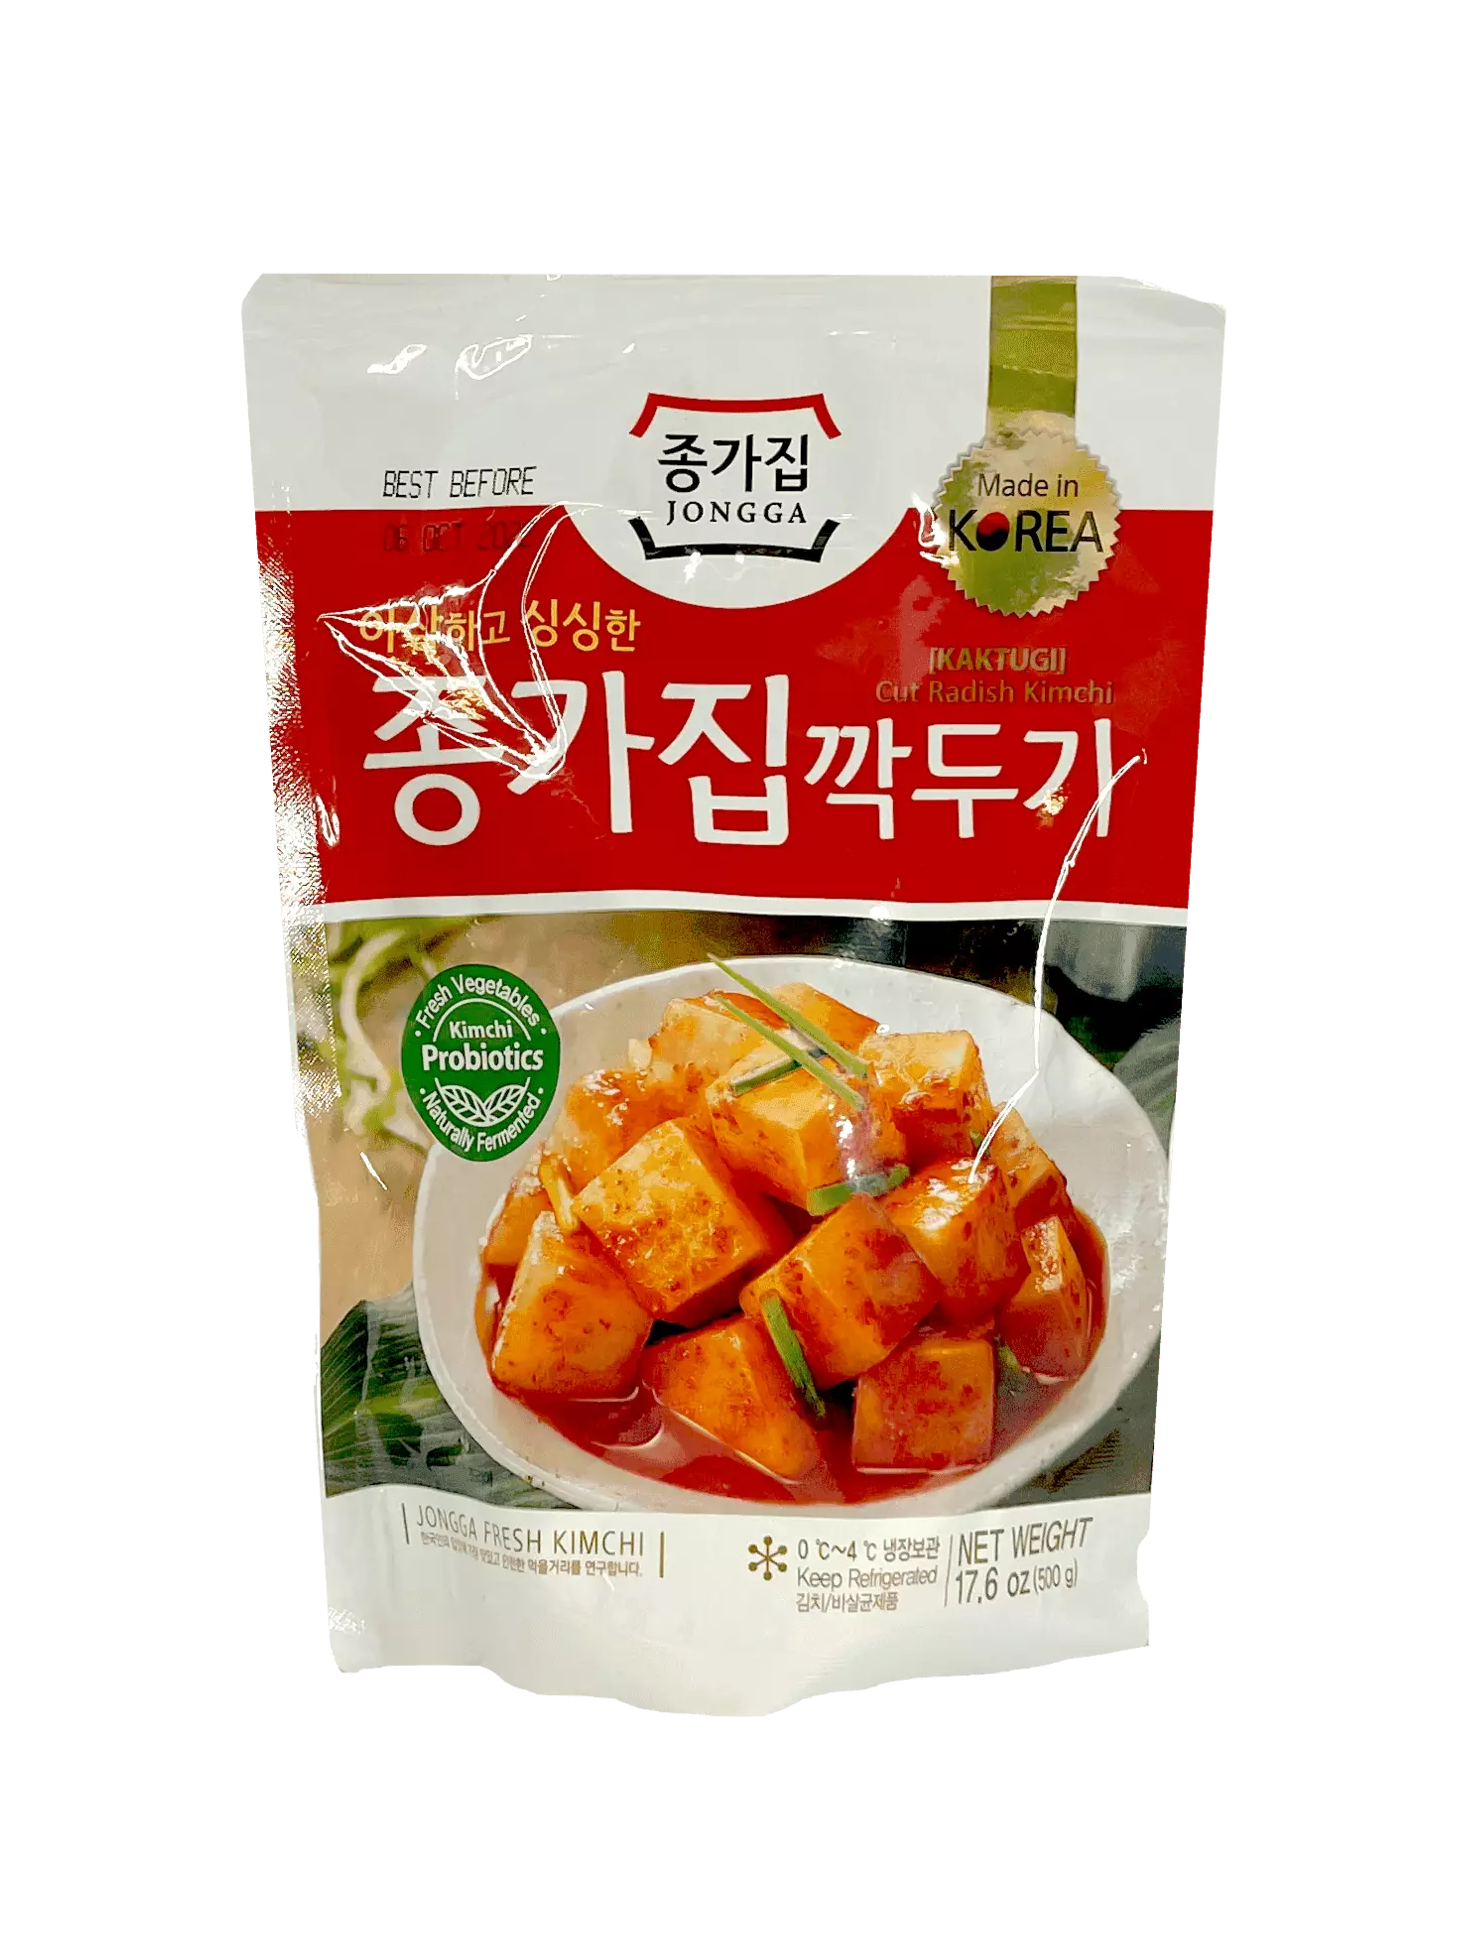 Chongga Kaktugi/Rättika Kimchi 500g Korea